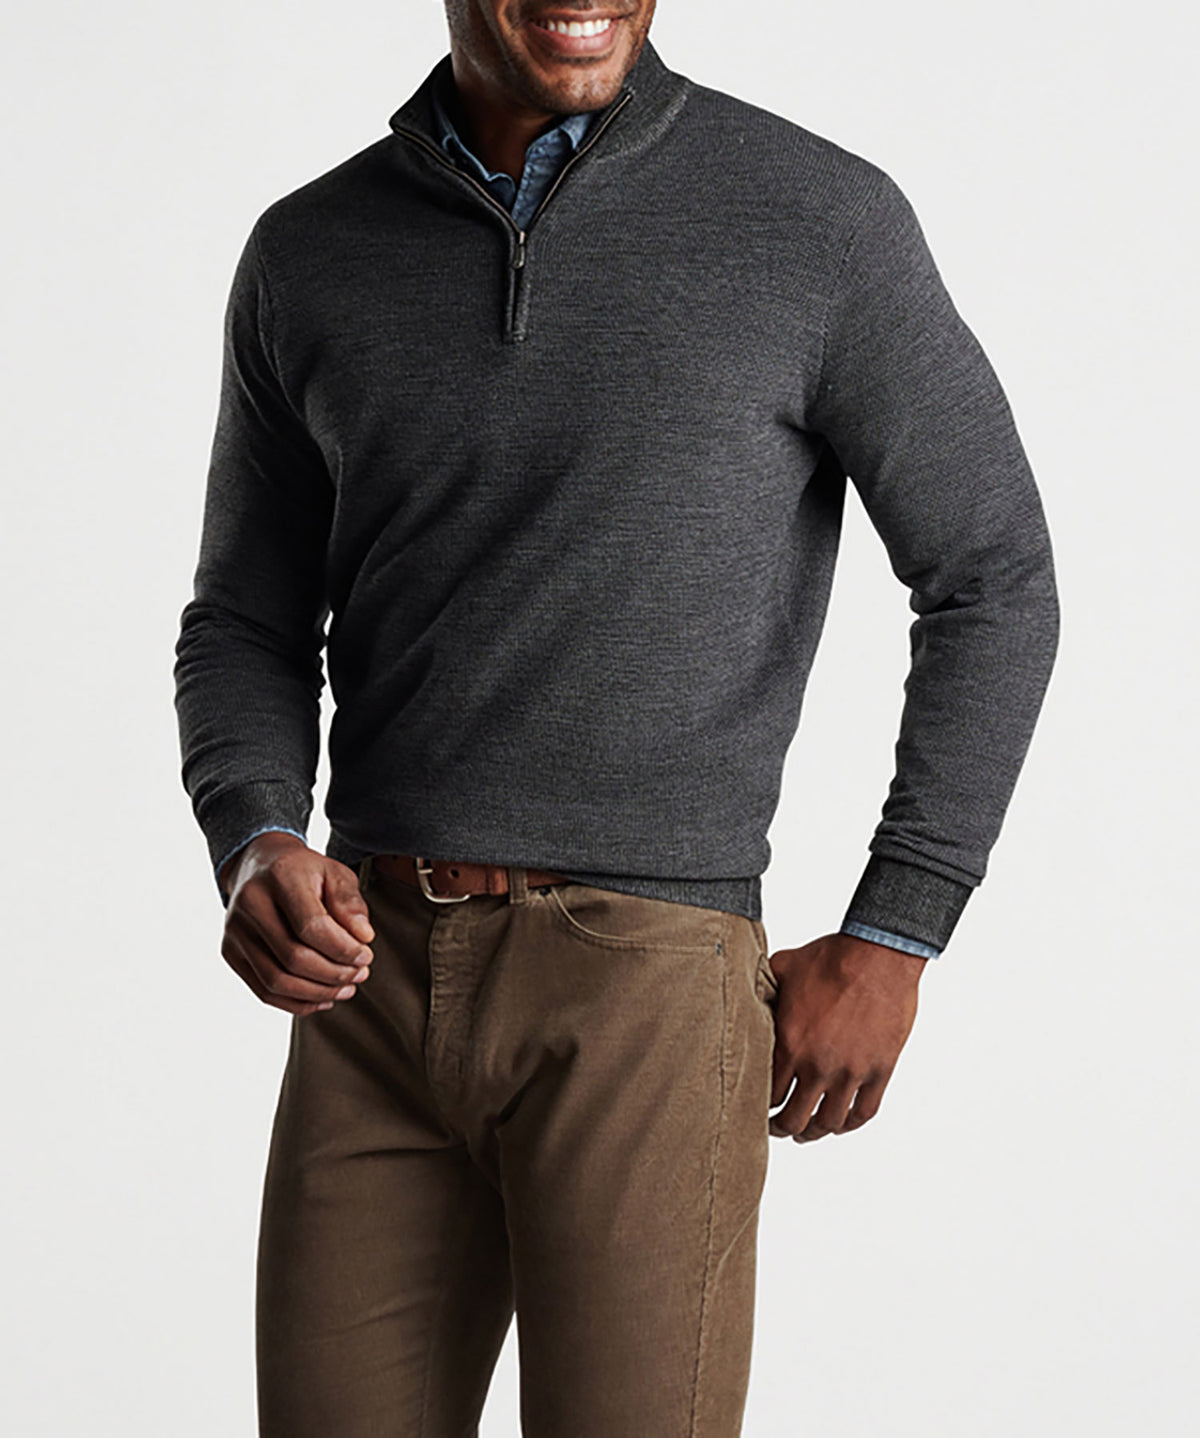 Peter Millar Breaker Birdseye Quarter-Zip Sweater, Men's Big & Tall